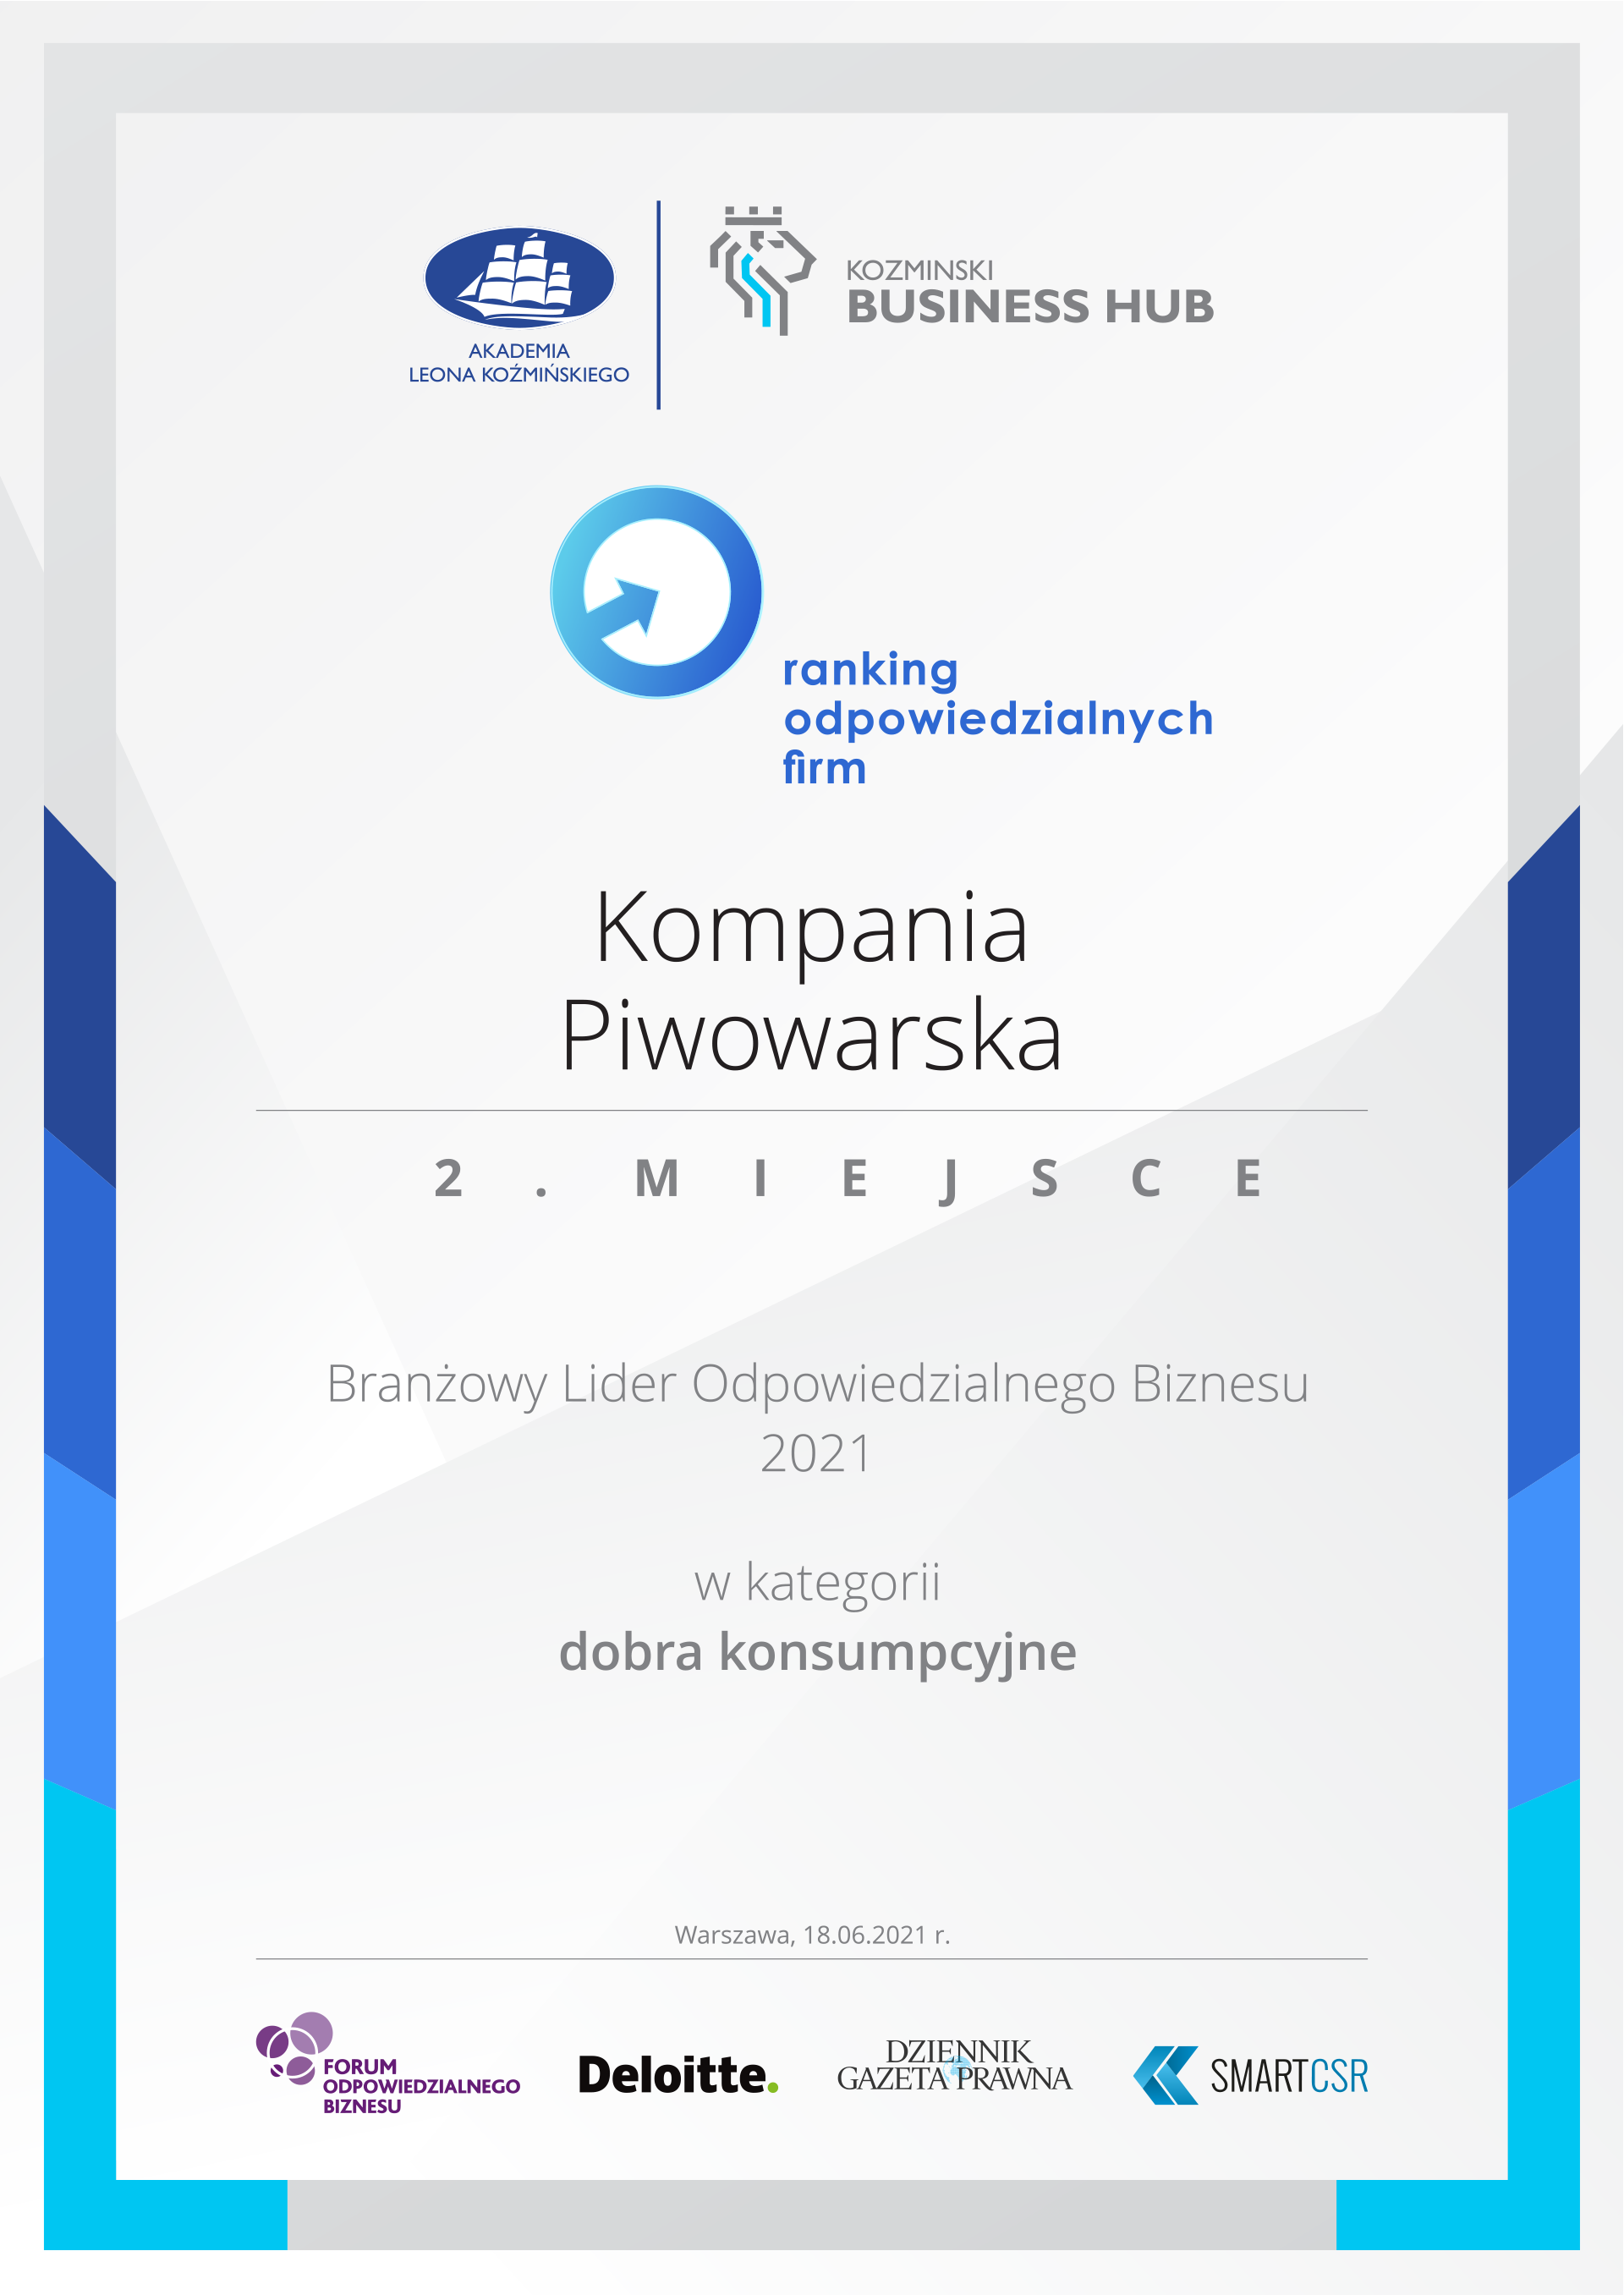 Kompania Piwowarska with the Responsible Business Industry Leader title